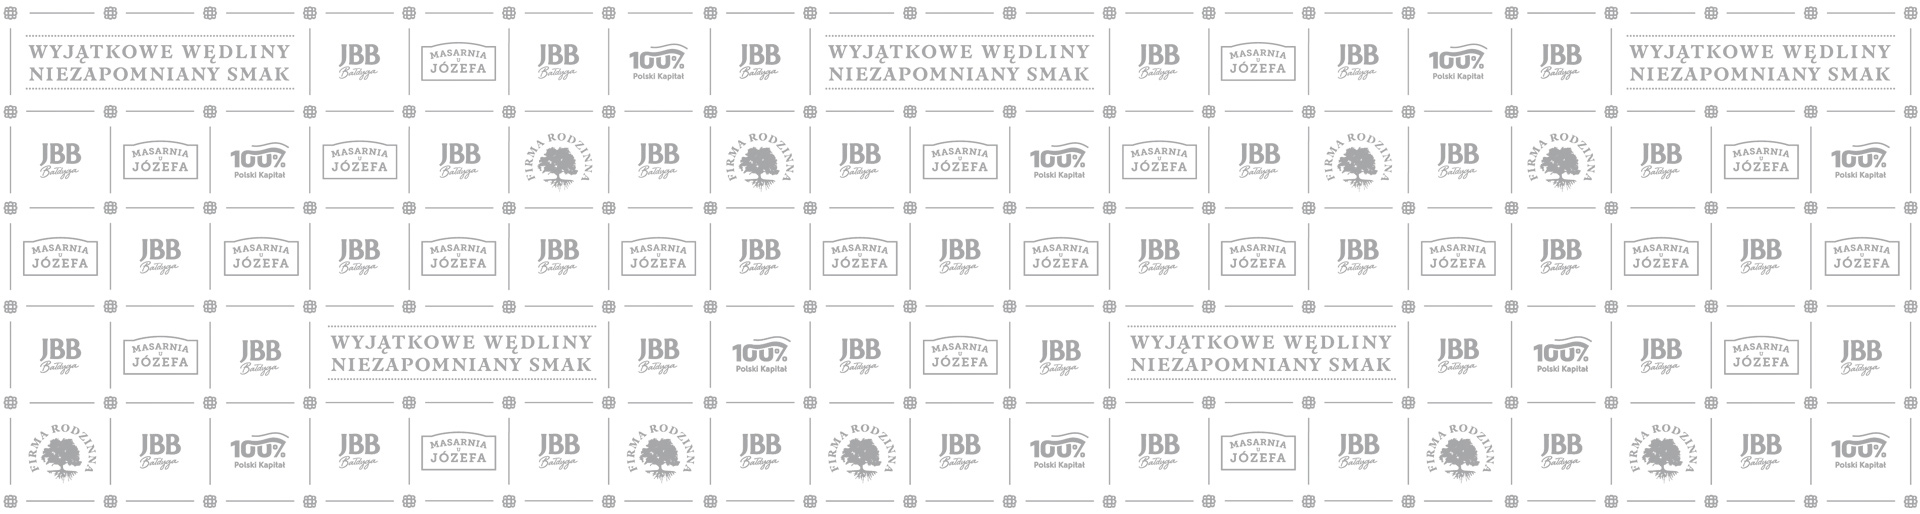 Typografia i ikonografia marki Masarnia u Józefa z PND Futura